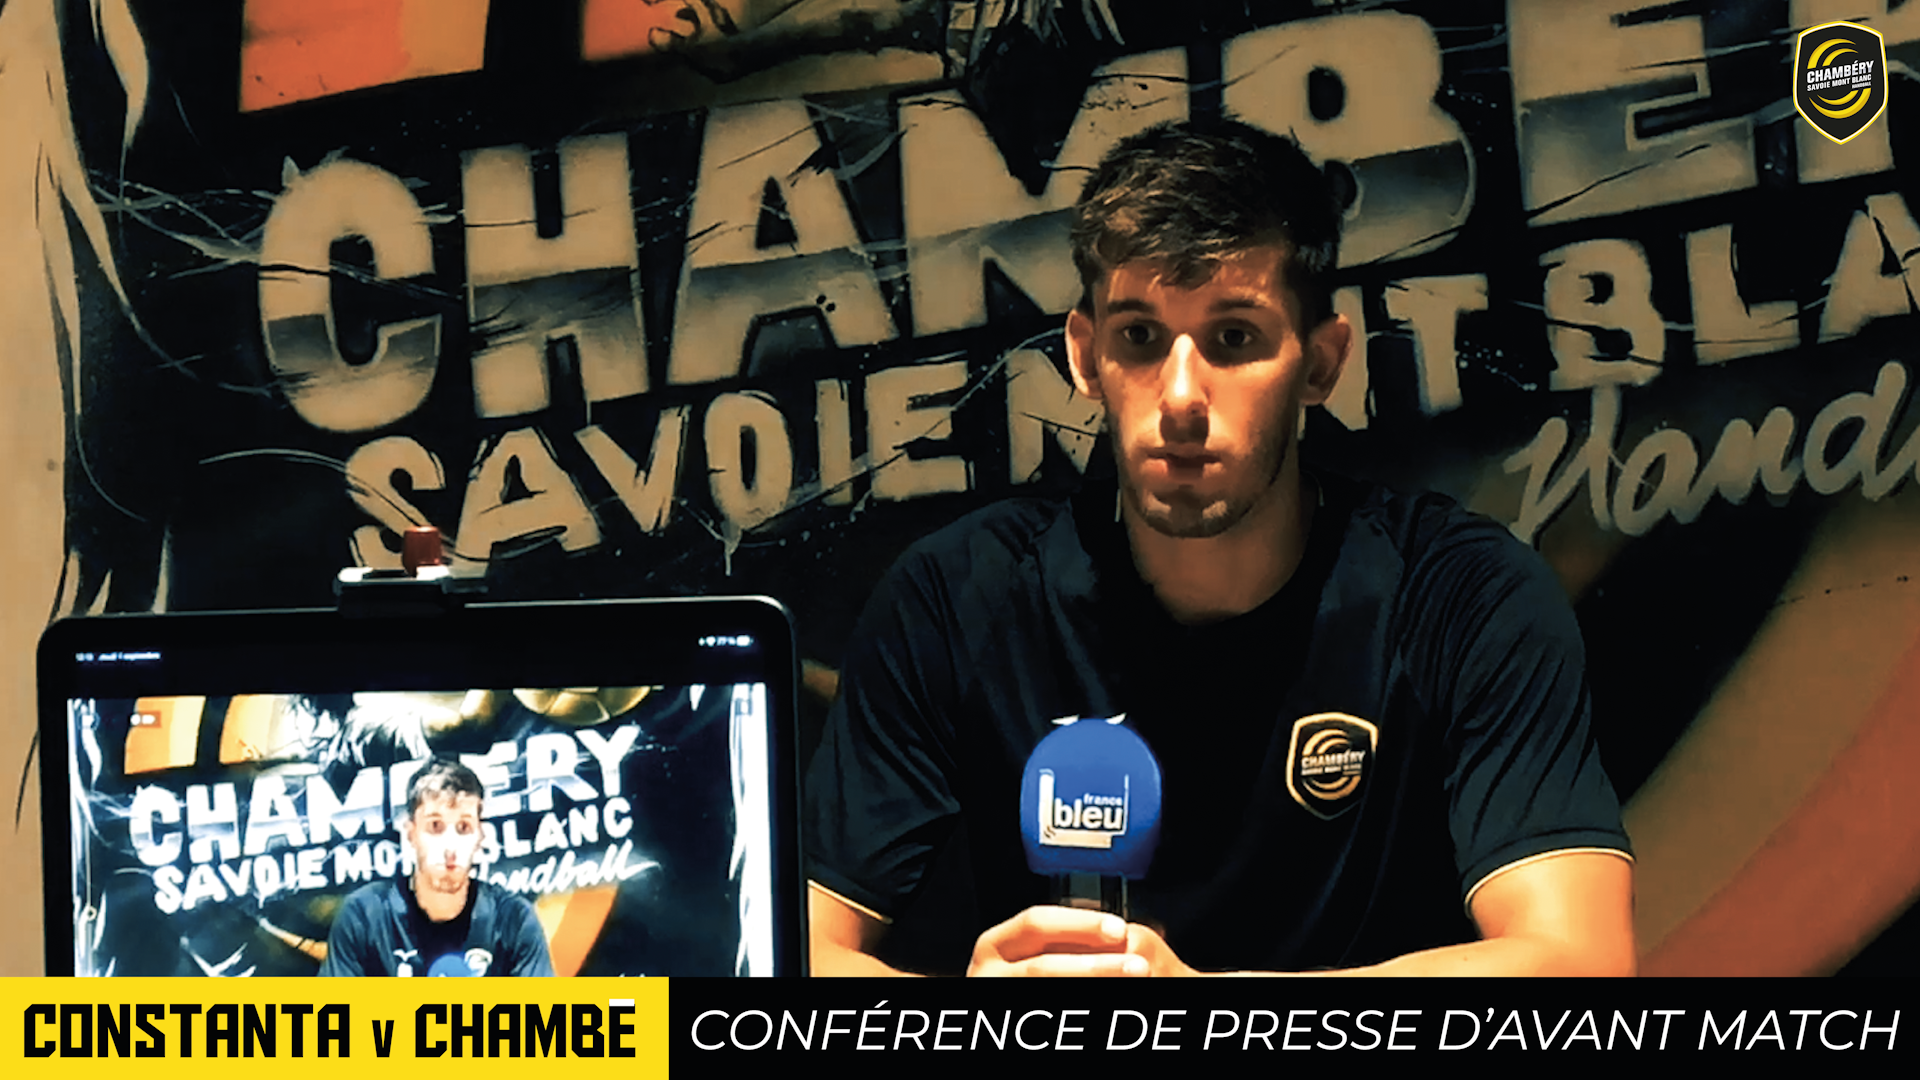 Constanta v Chambé : Conférence de presse d'avant match